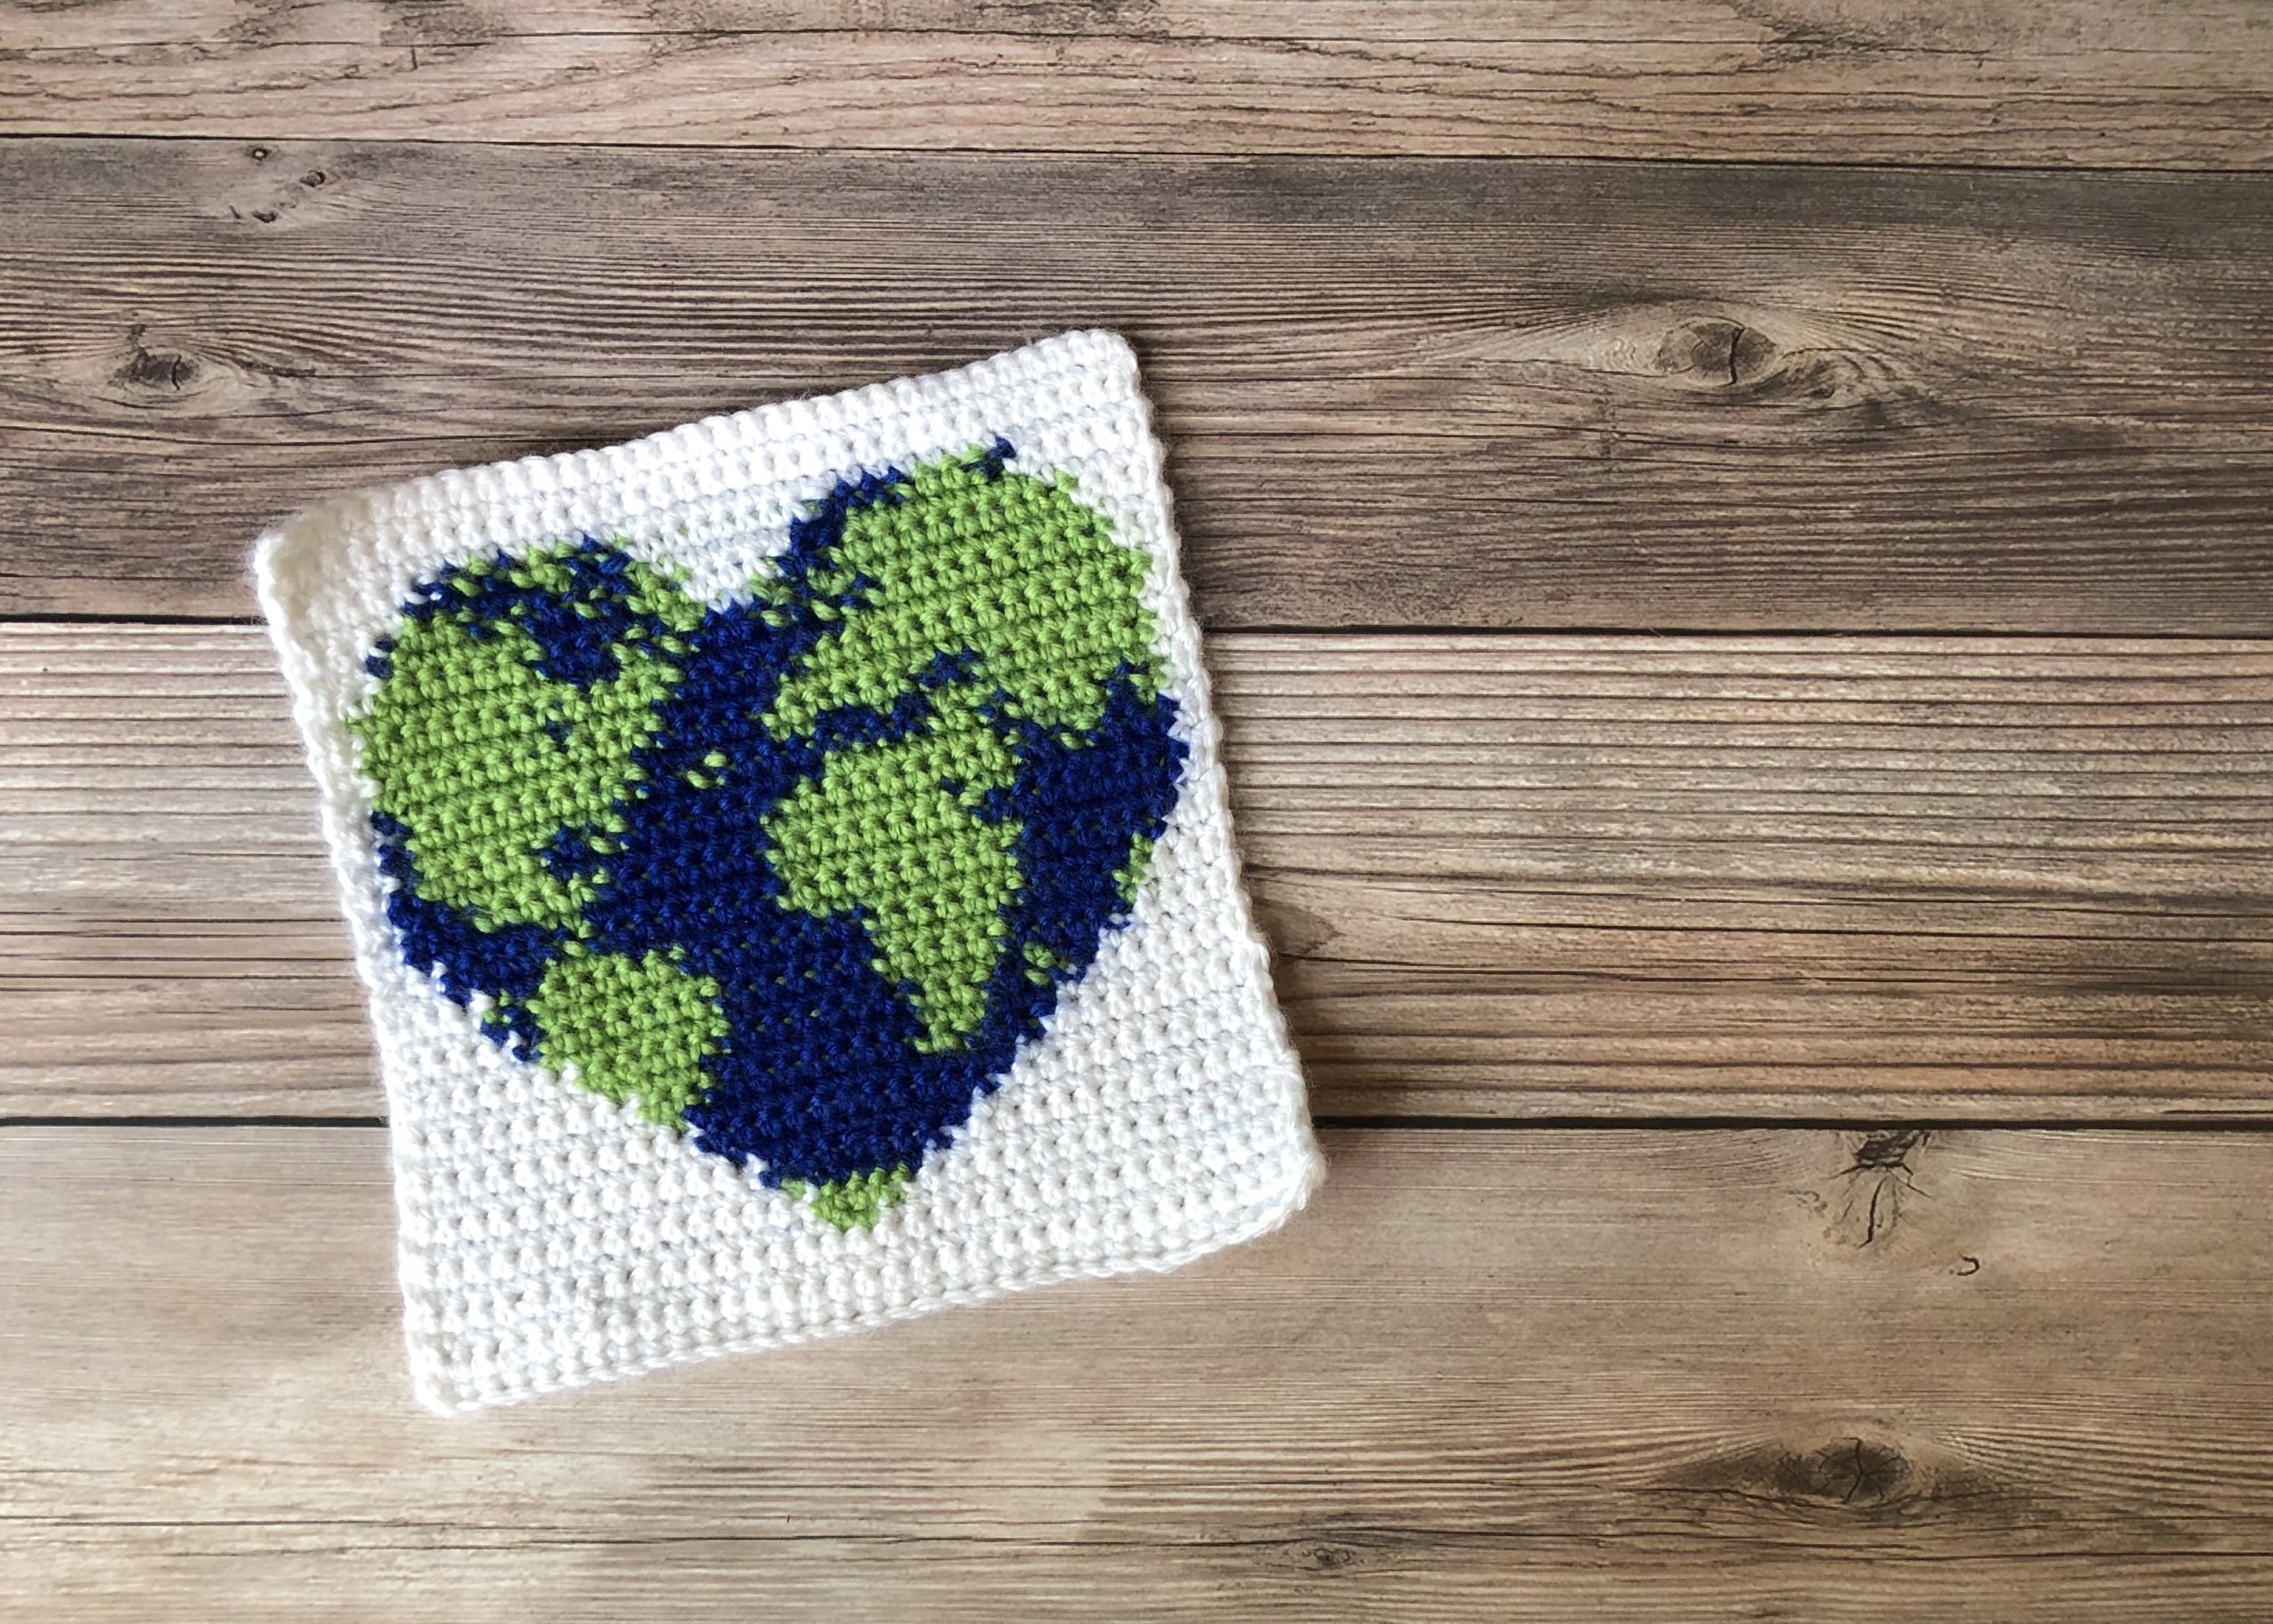 Free crochet pattern for Earth blanket square